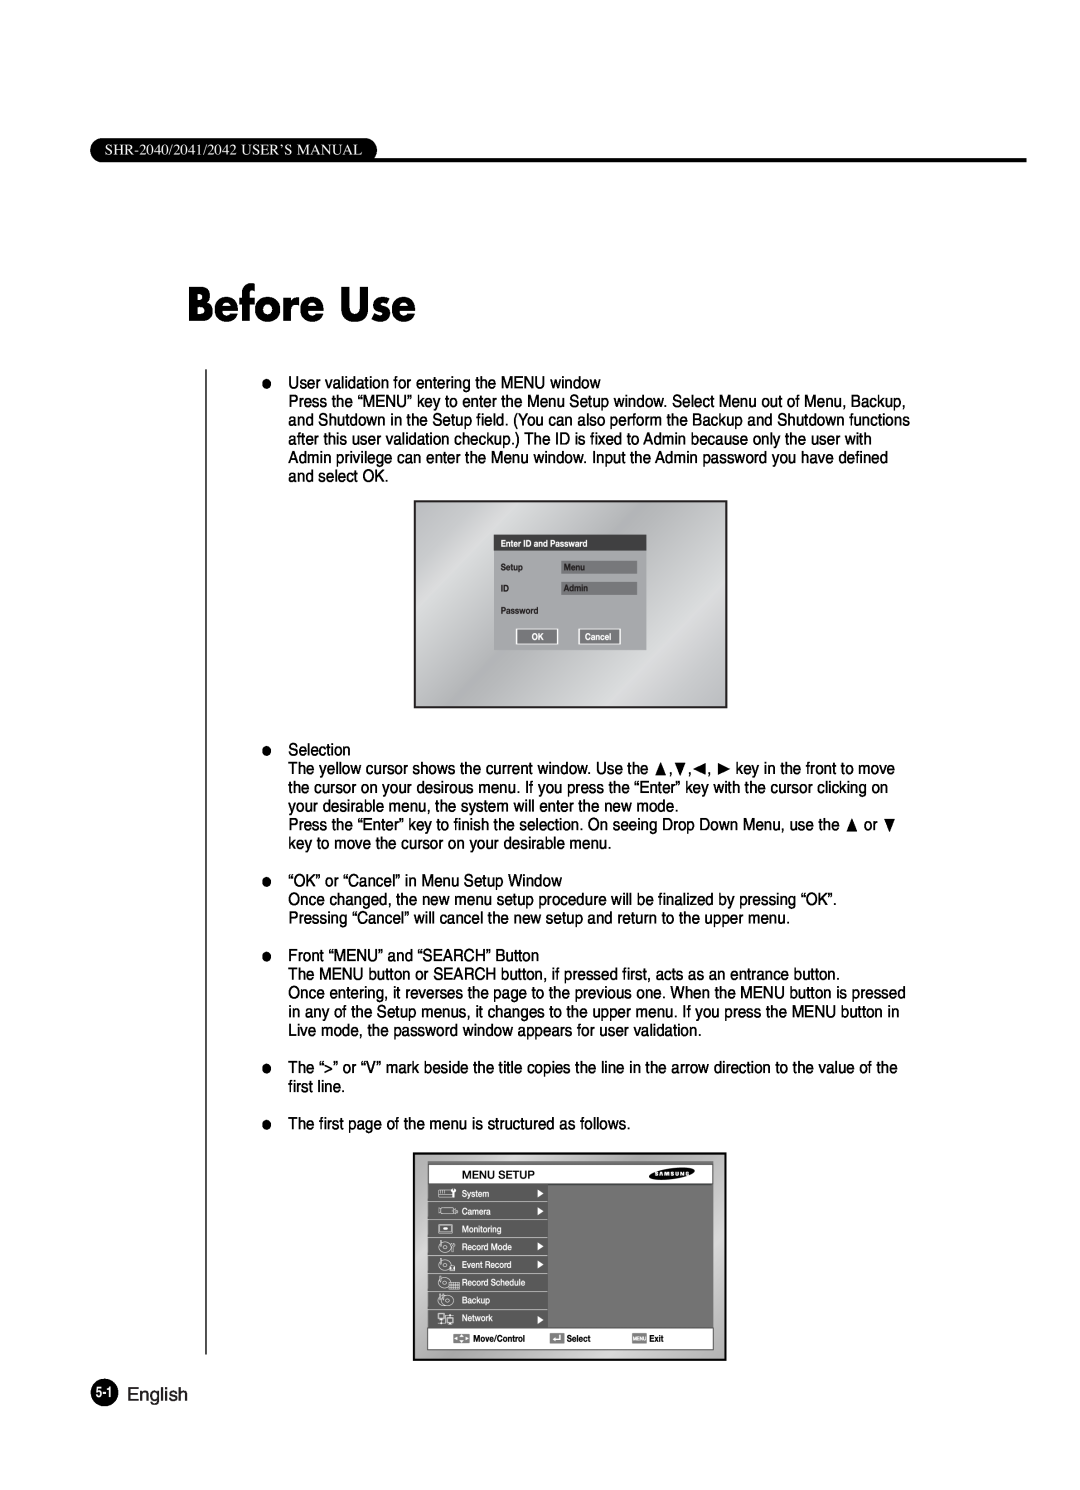 Samsung SHR-2042P250, SHR-2040P250 manual Before Use, English 